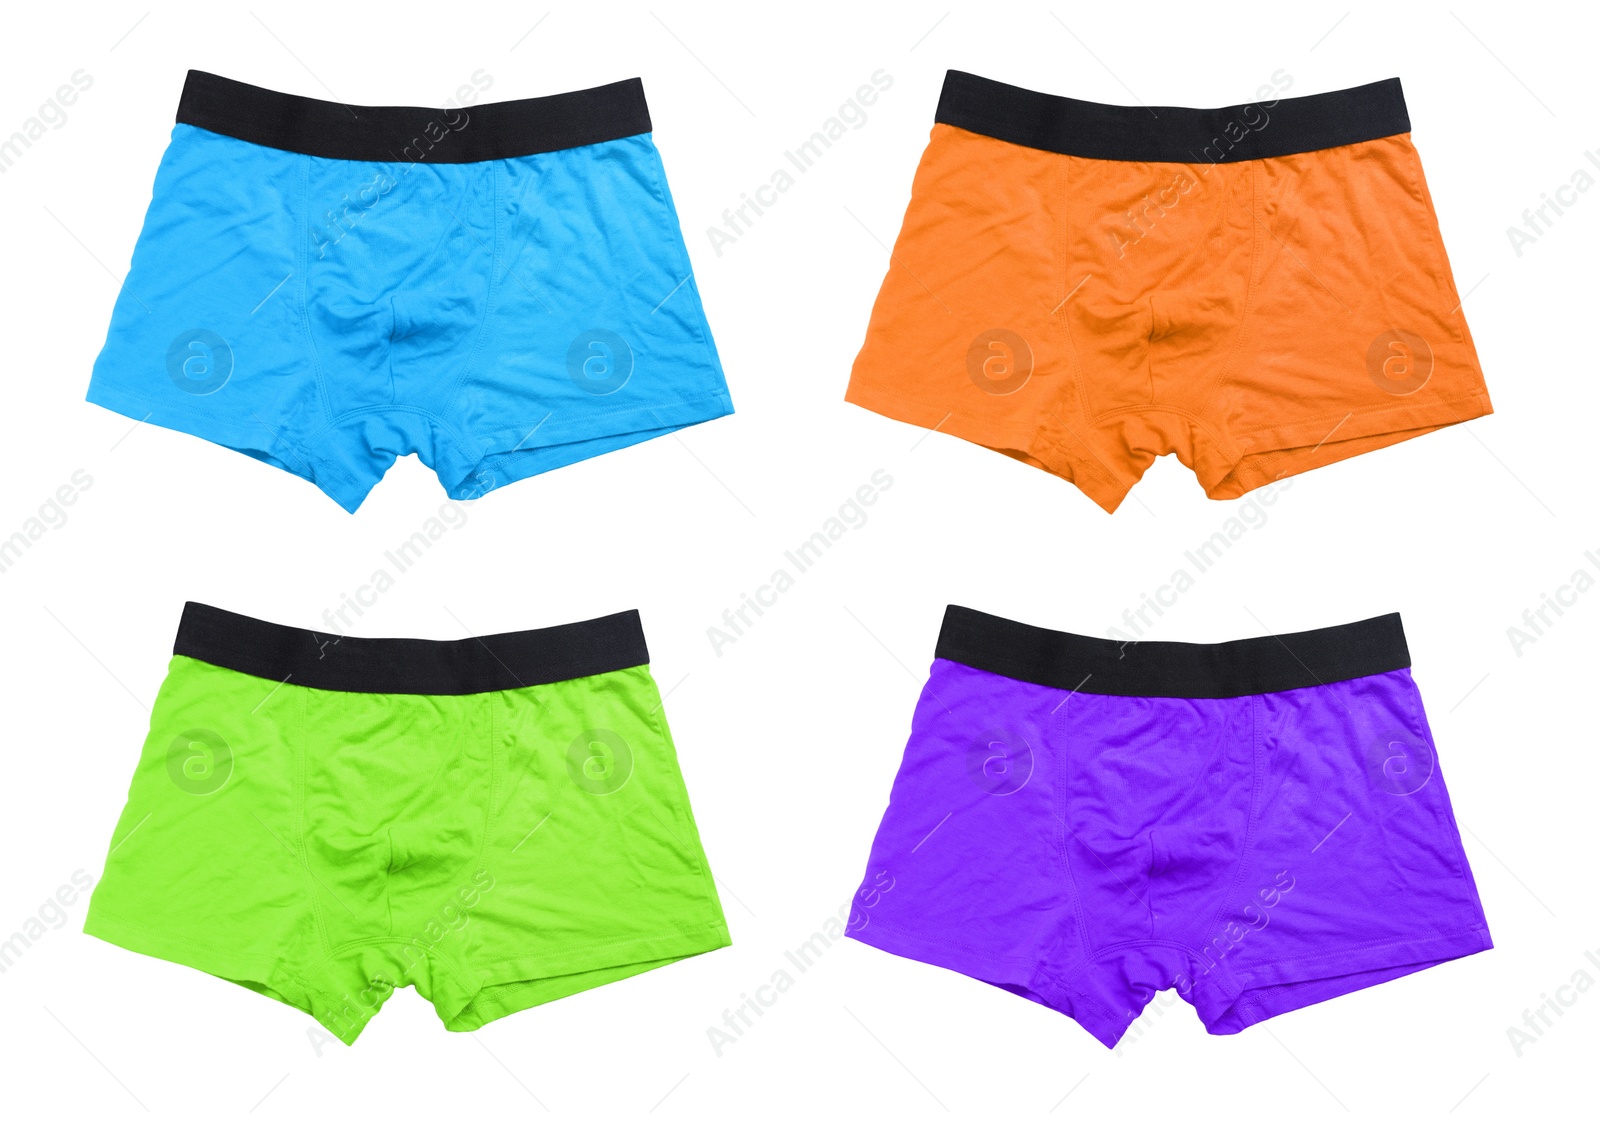 Image of Set of men's underwear on white background